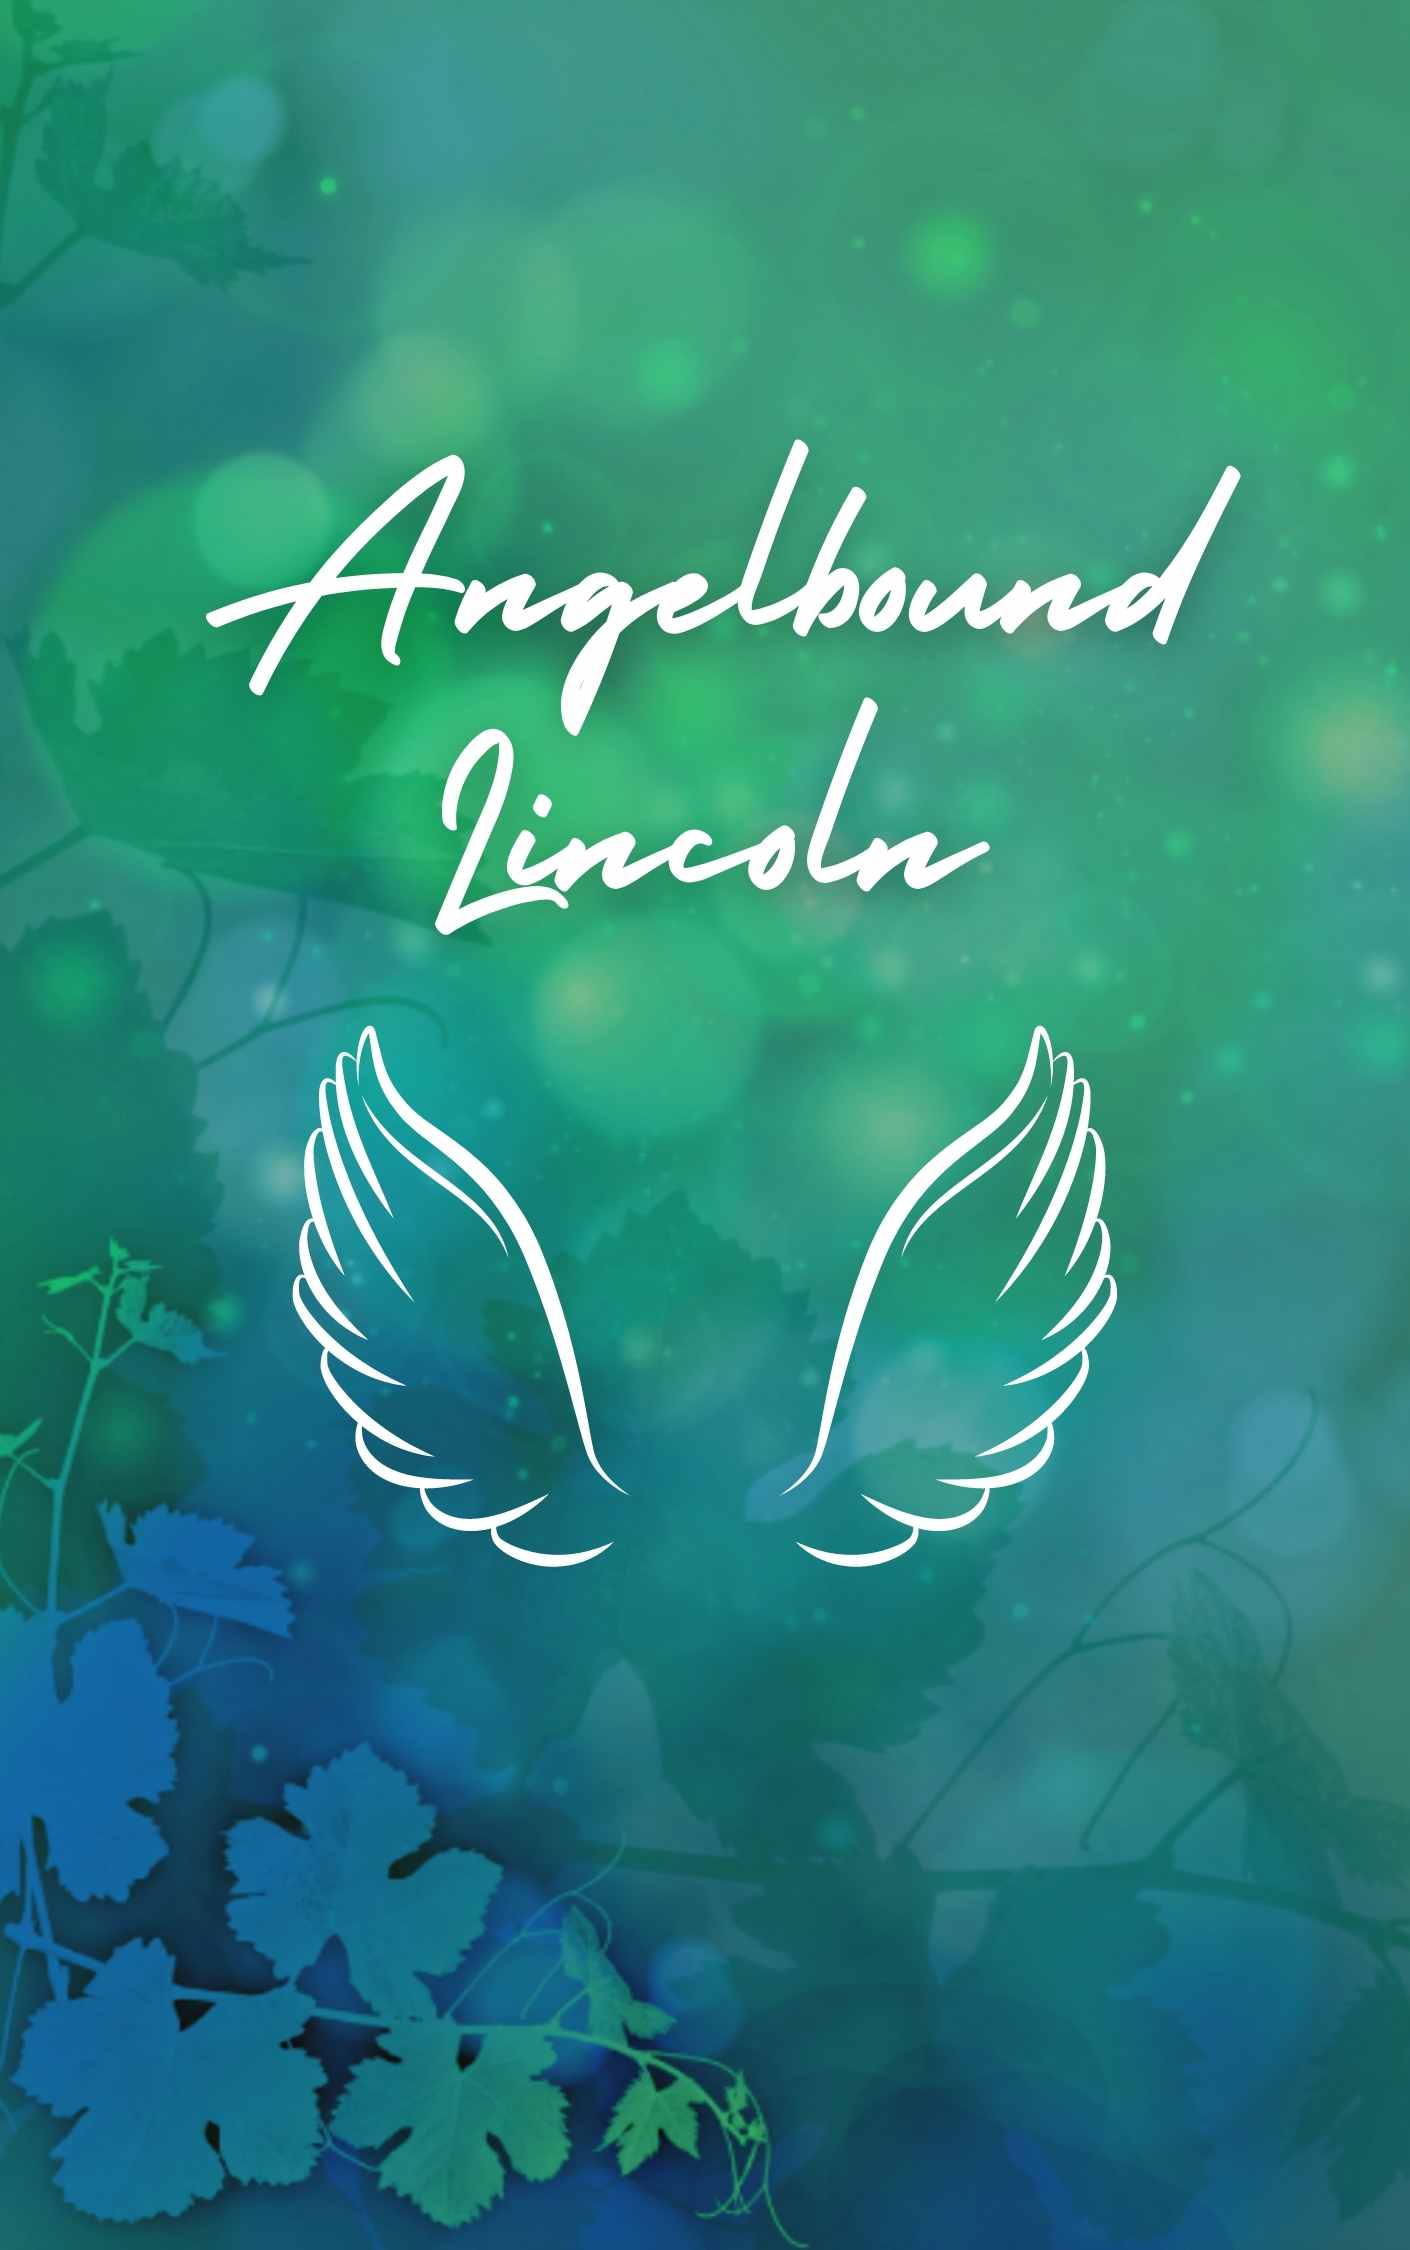 Angelbound d Lincoln Series